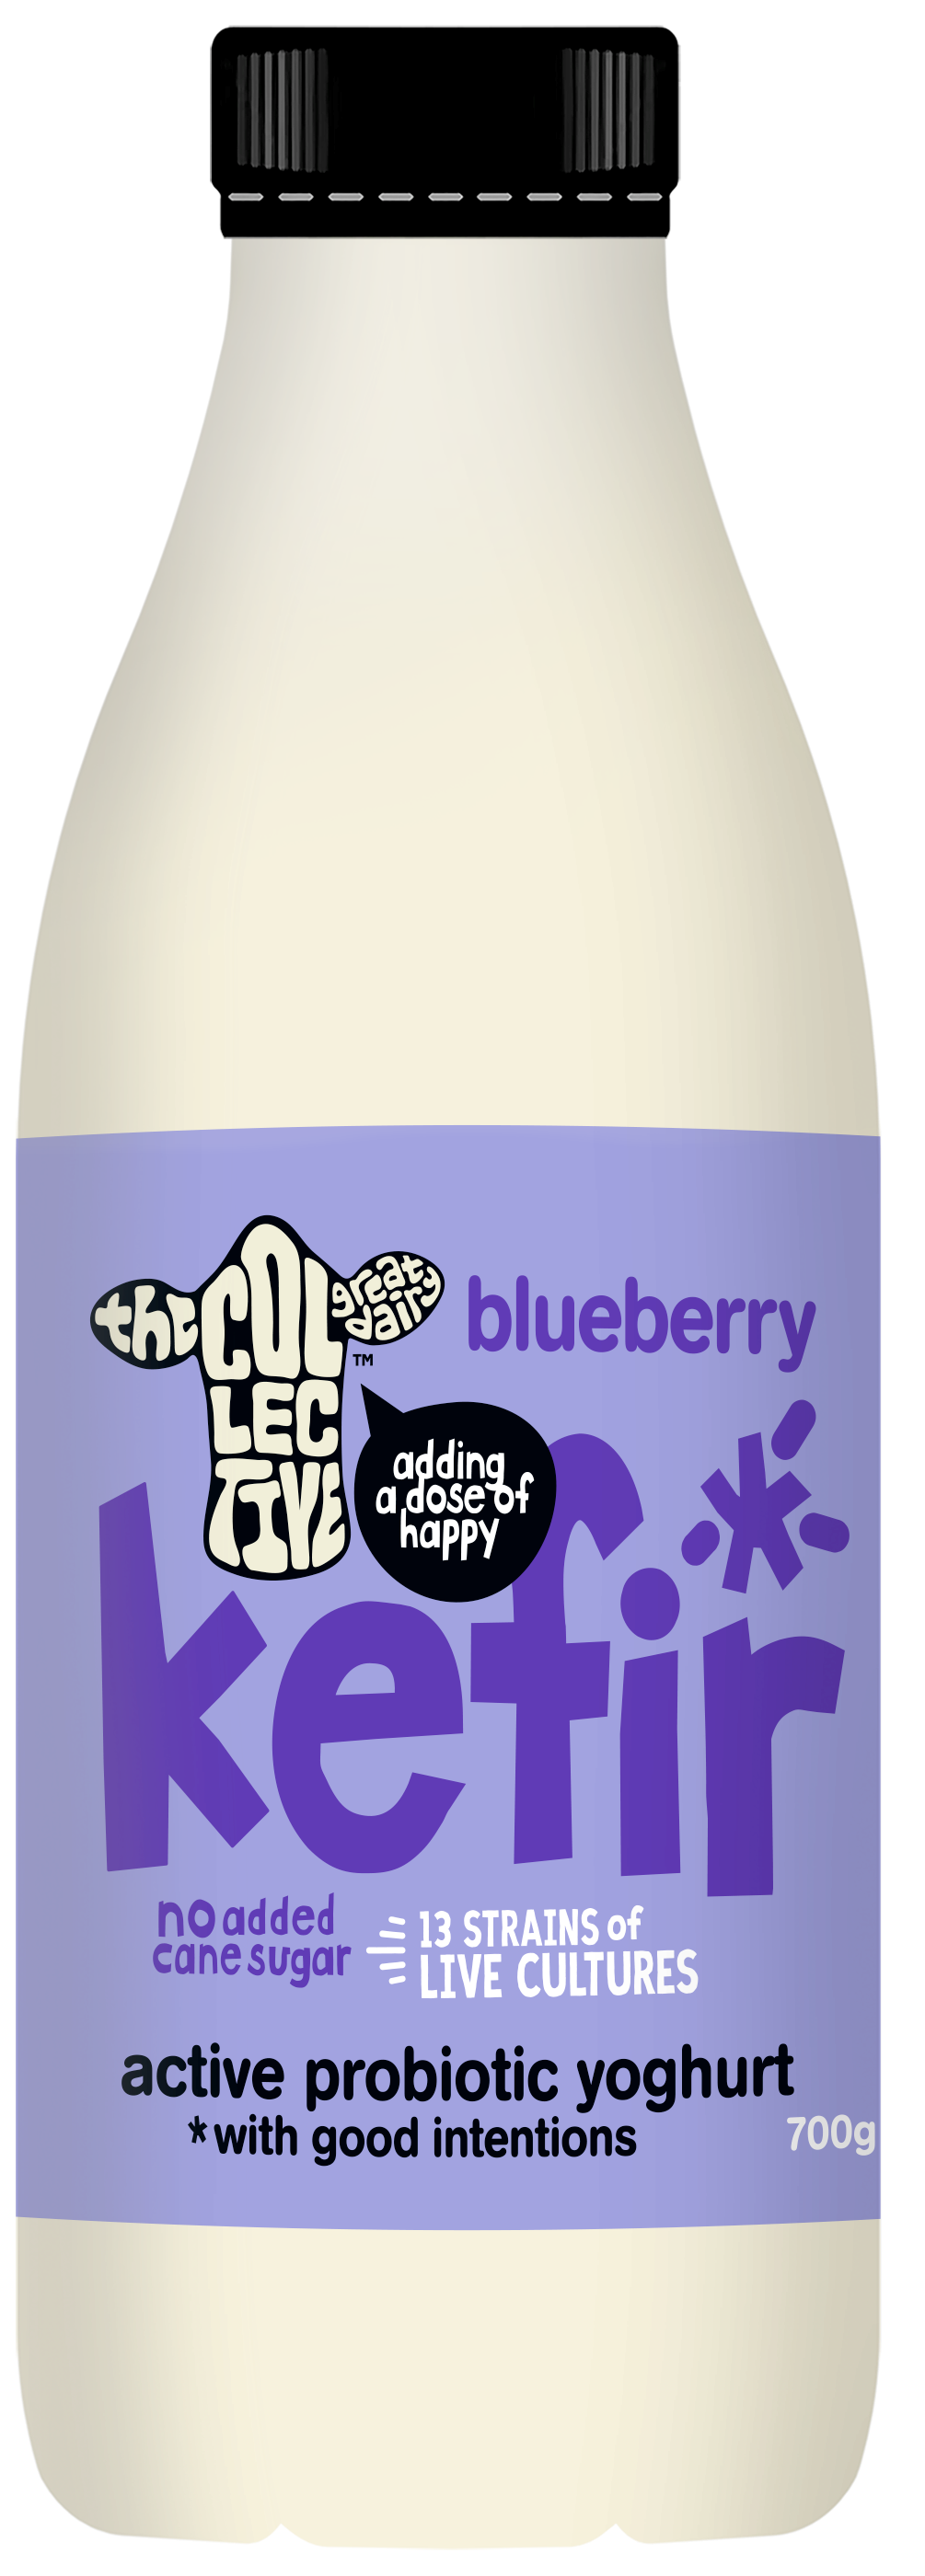 blueberry kefir